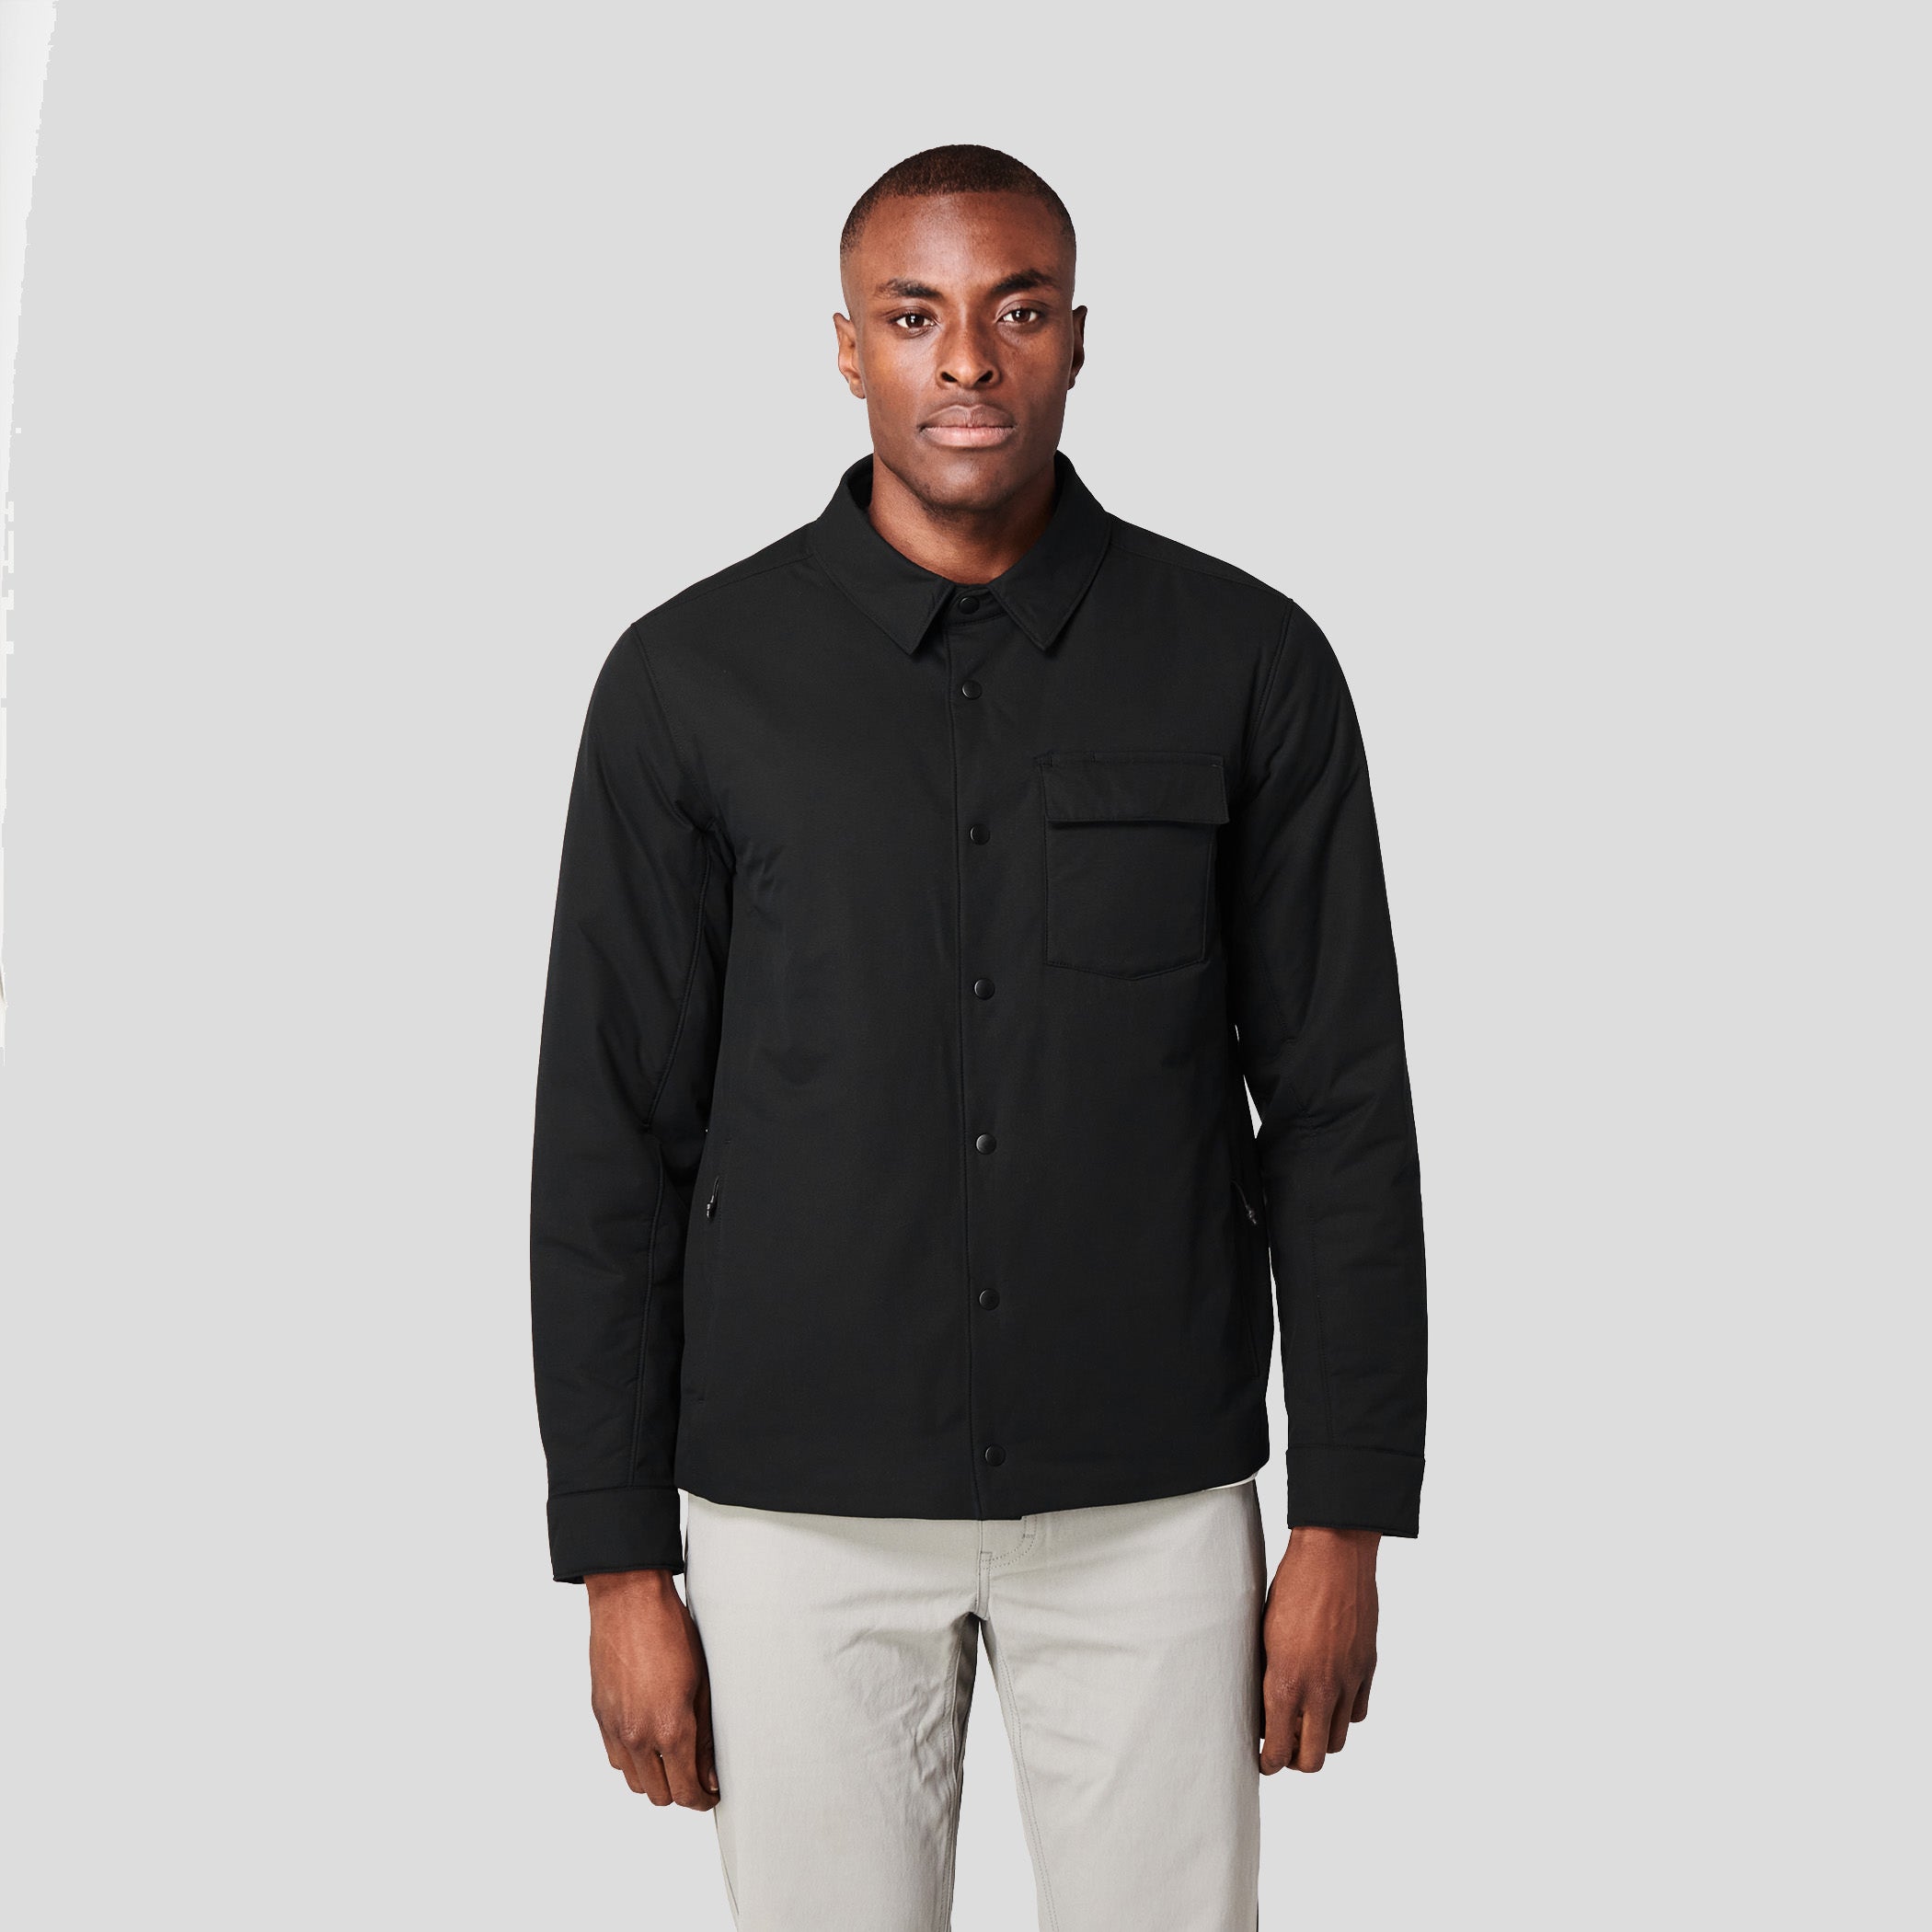 AirLoft Shirt Jacket - Black
